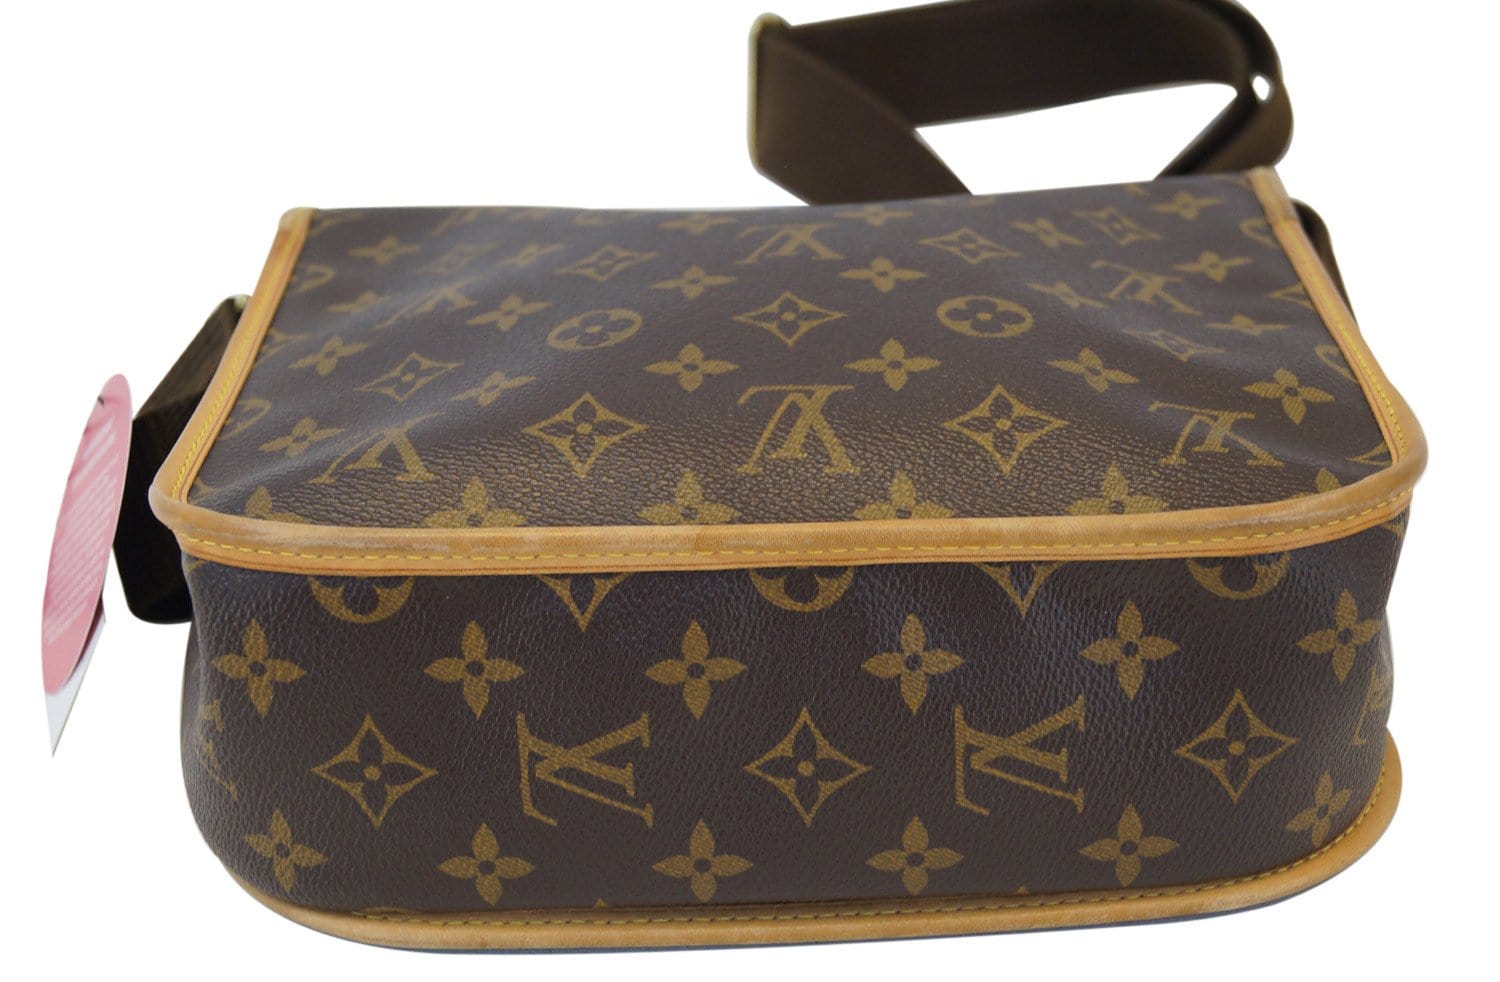 Louis Vuitton 2008 Sac Bosphore 2way Business Shoulder Handbag